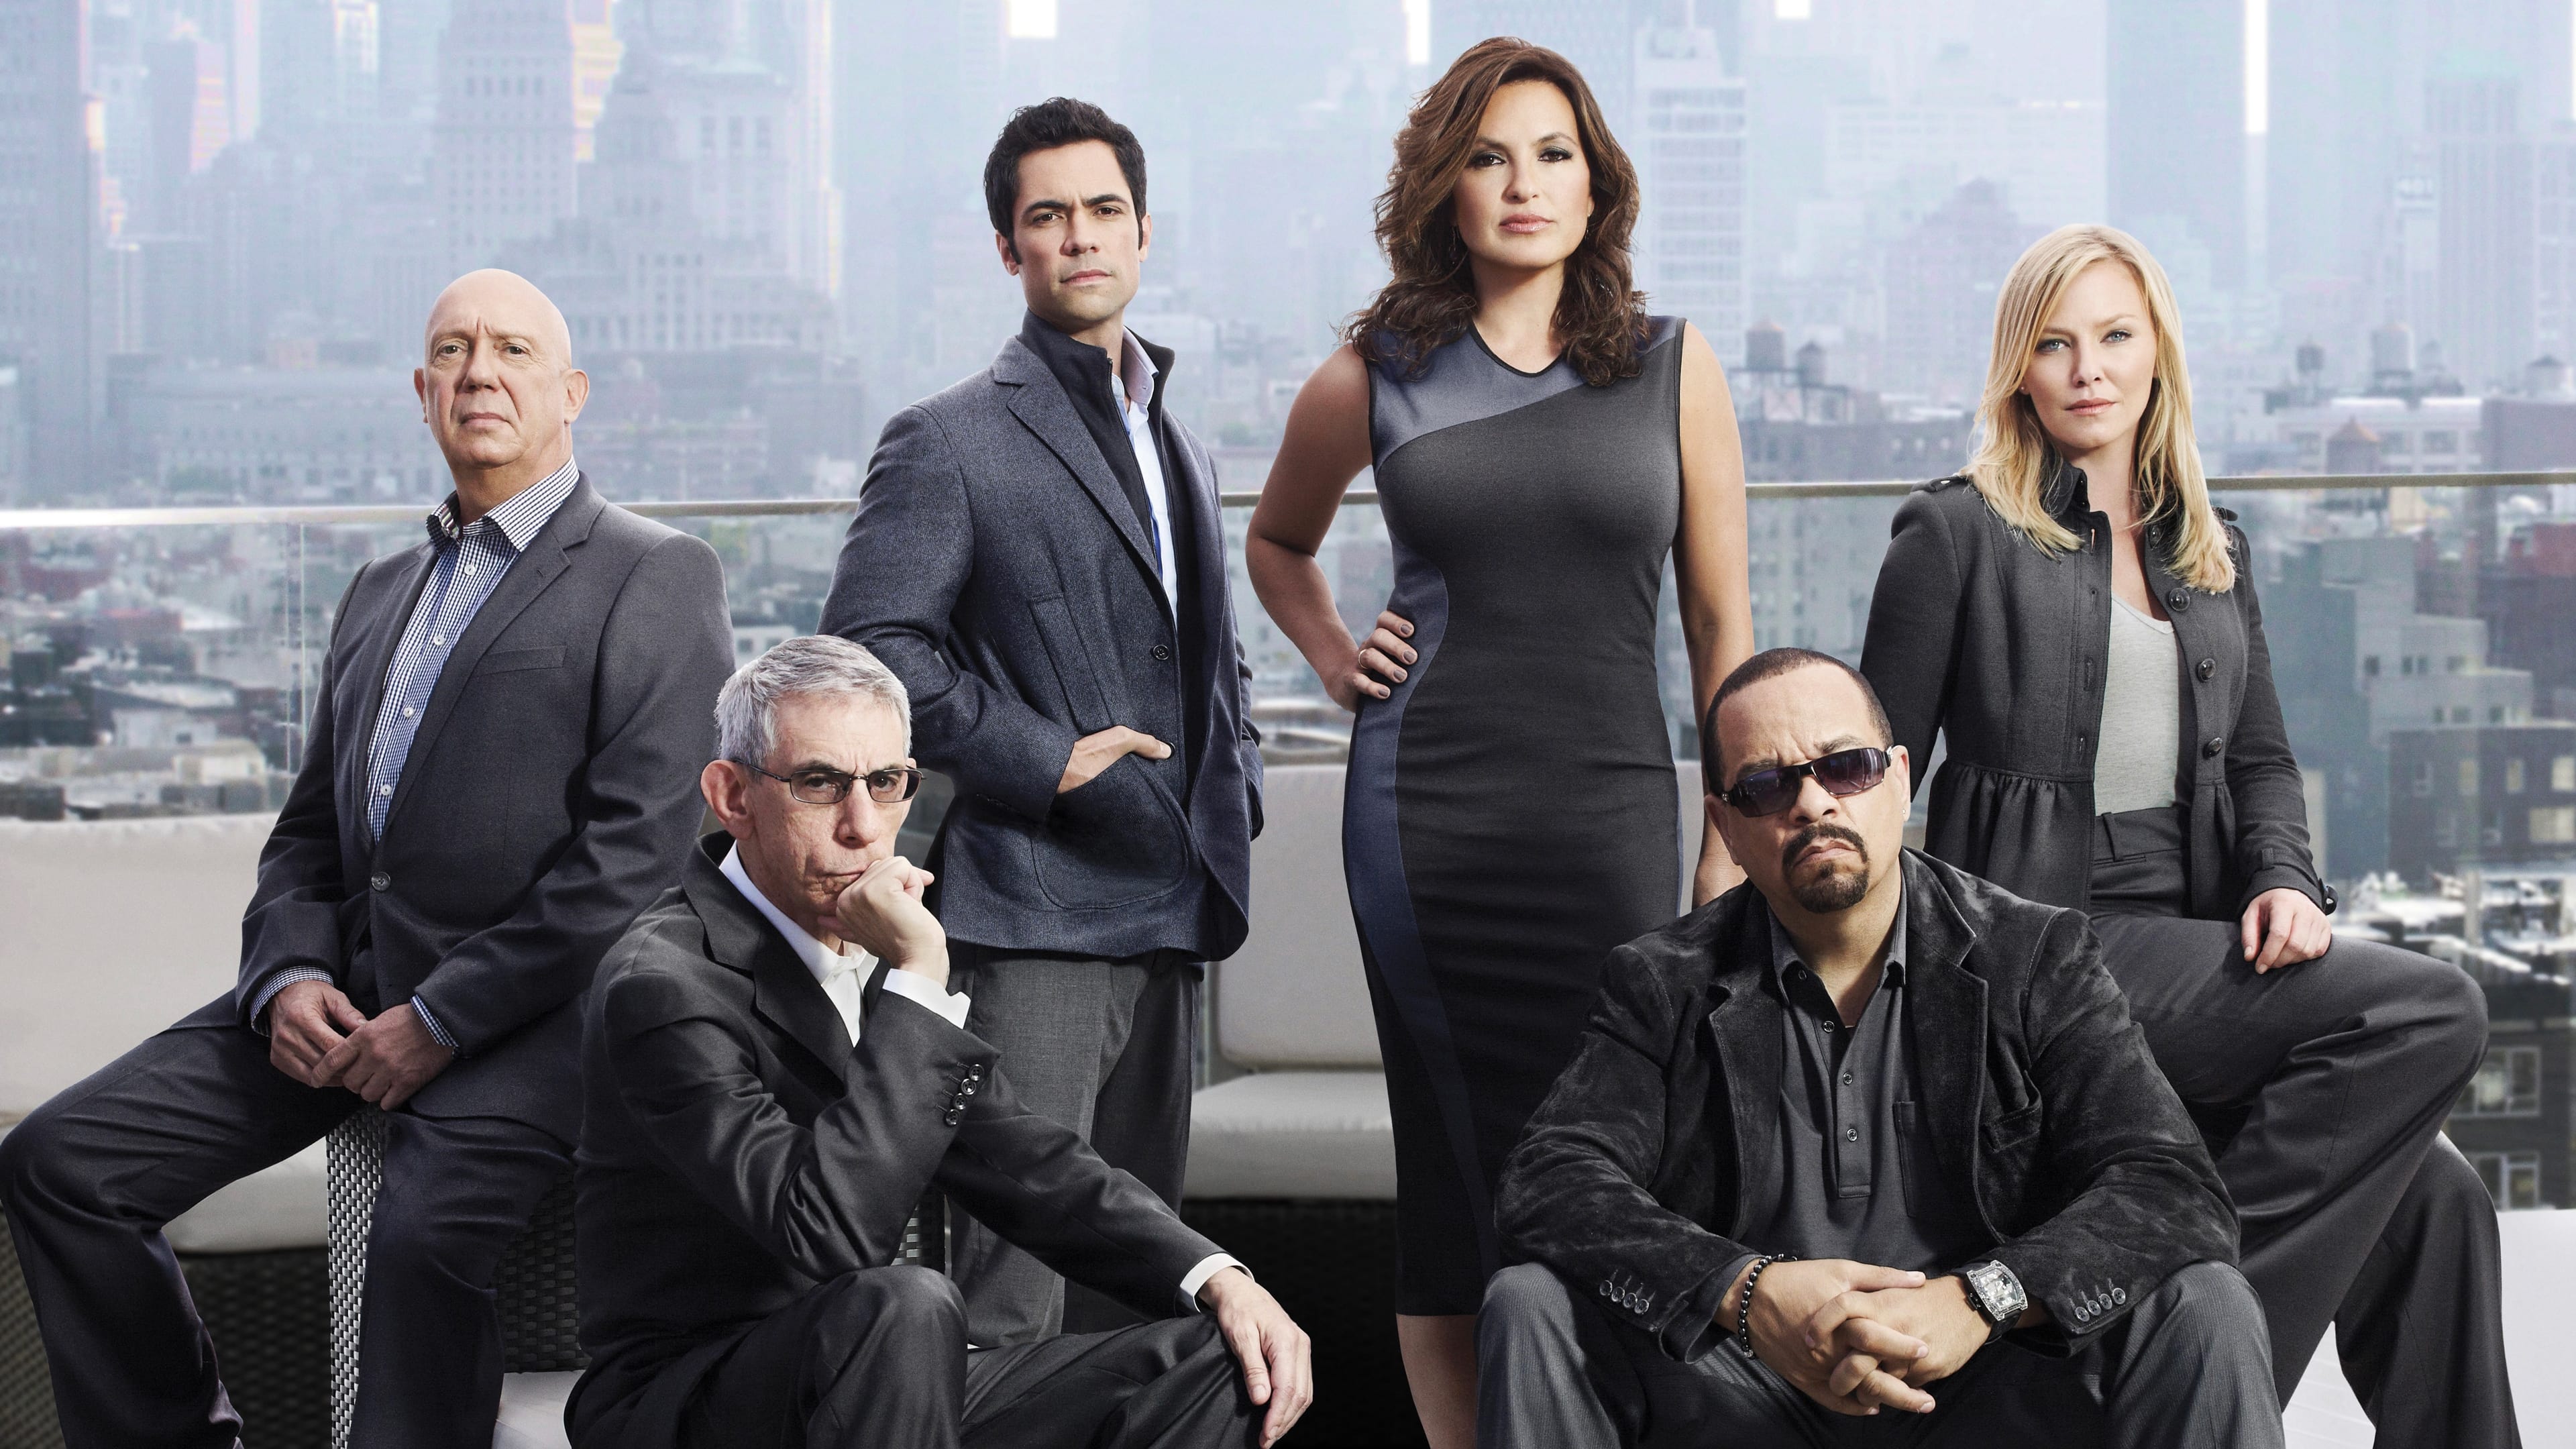 Law & Order: Special Victims Unit - Season 1